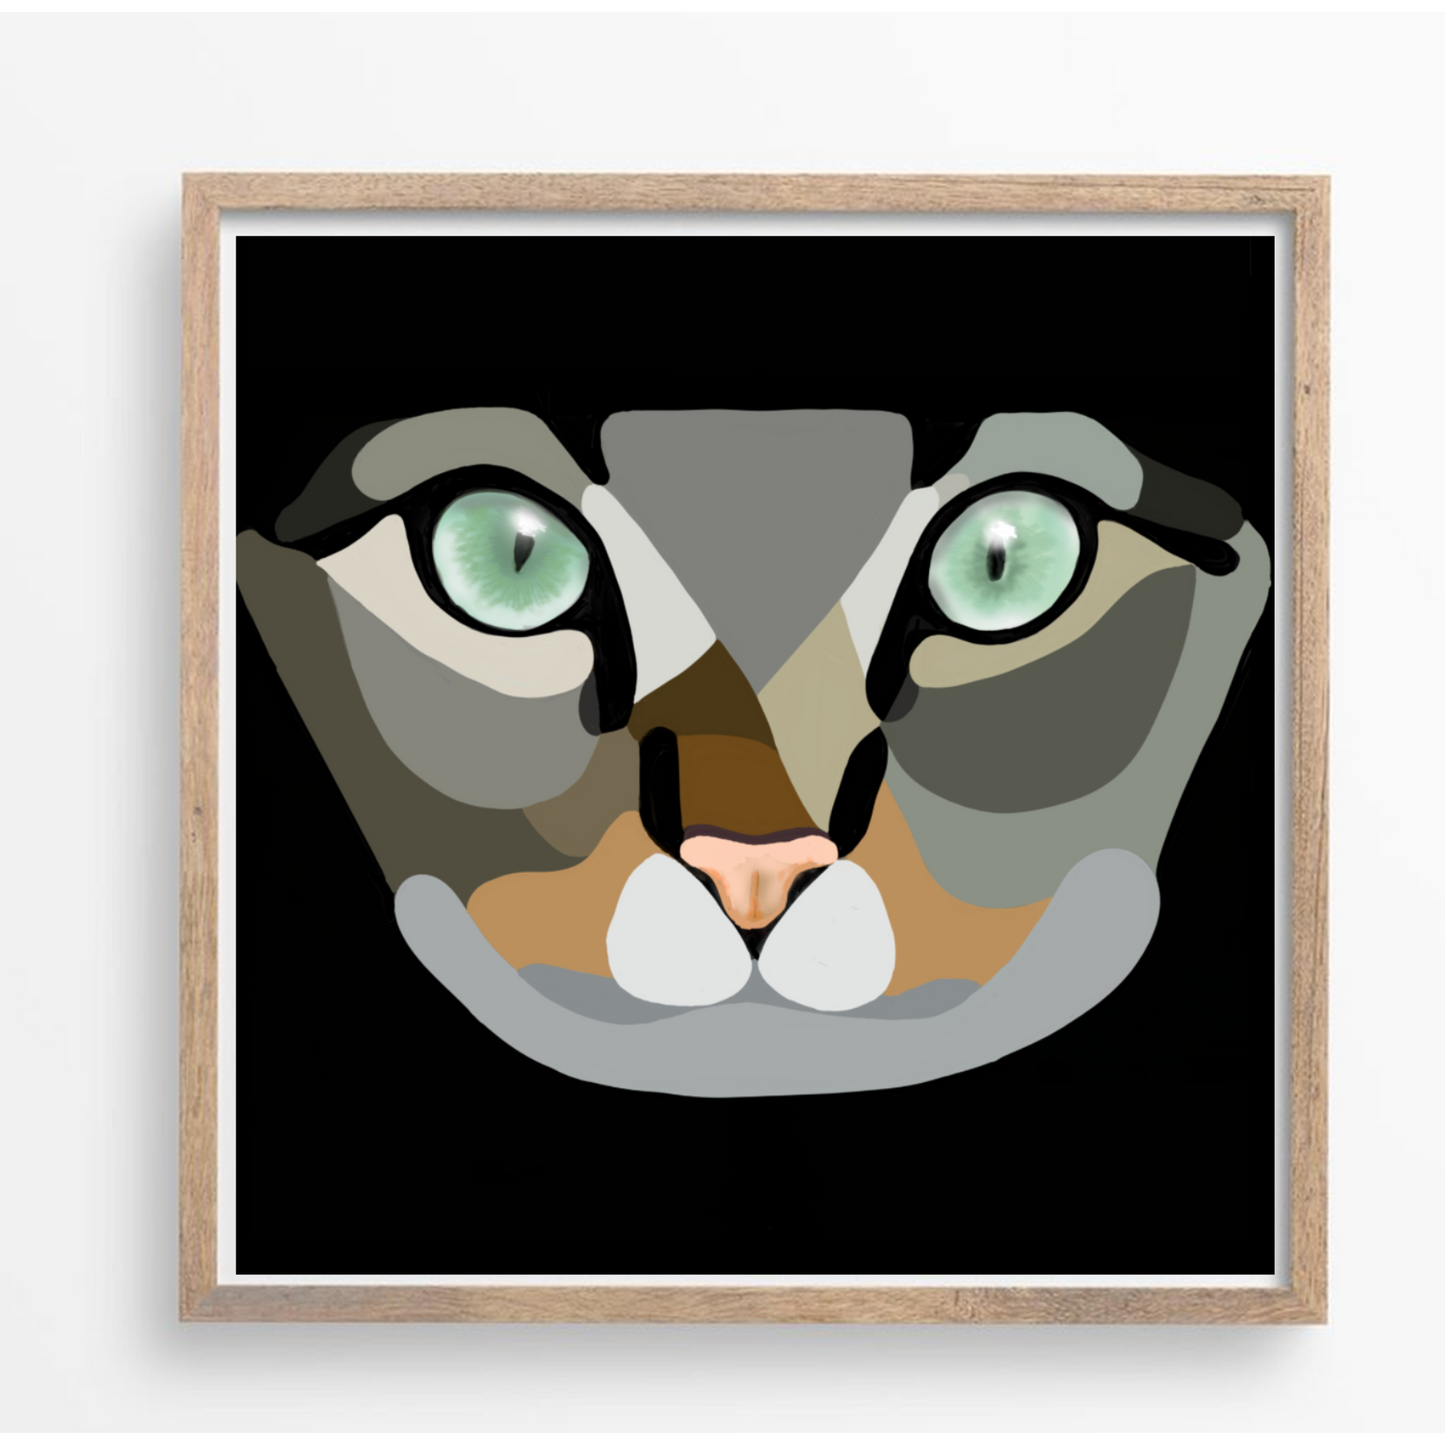 Micci my cat canvas Rolled Canvas - valerie-digital-art